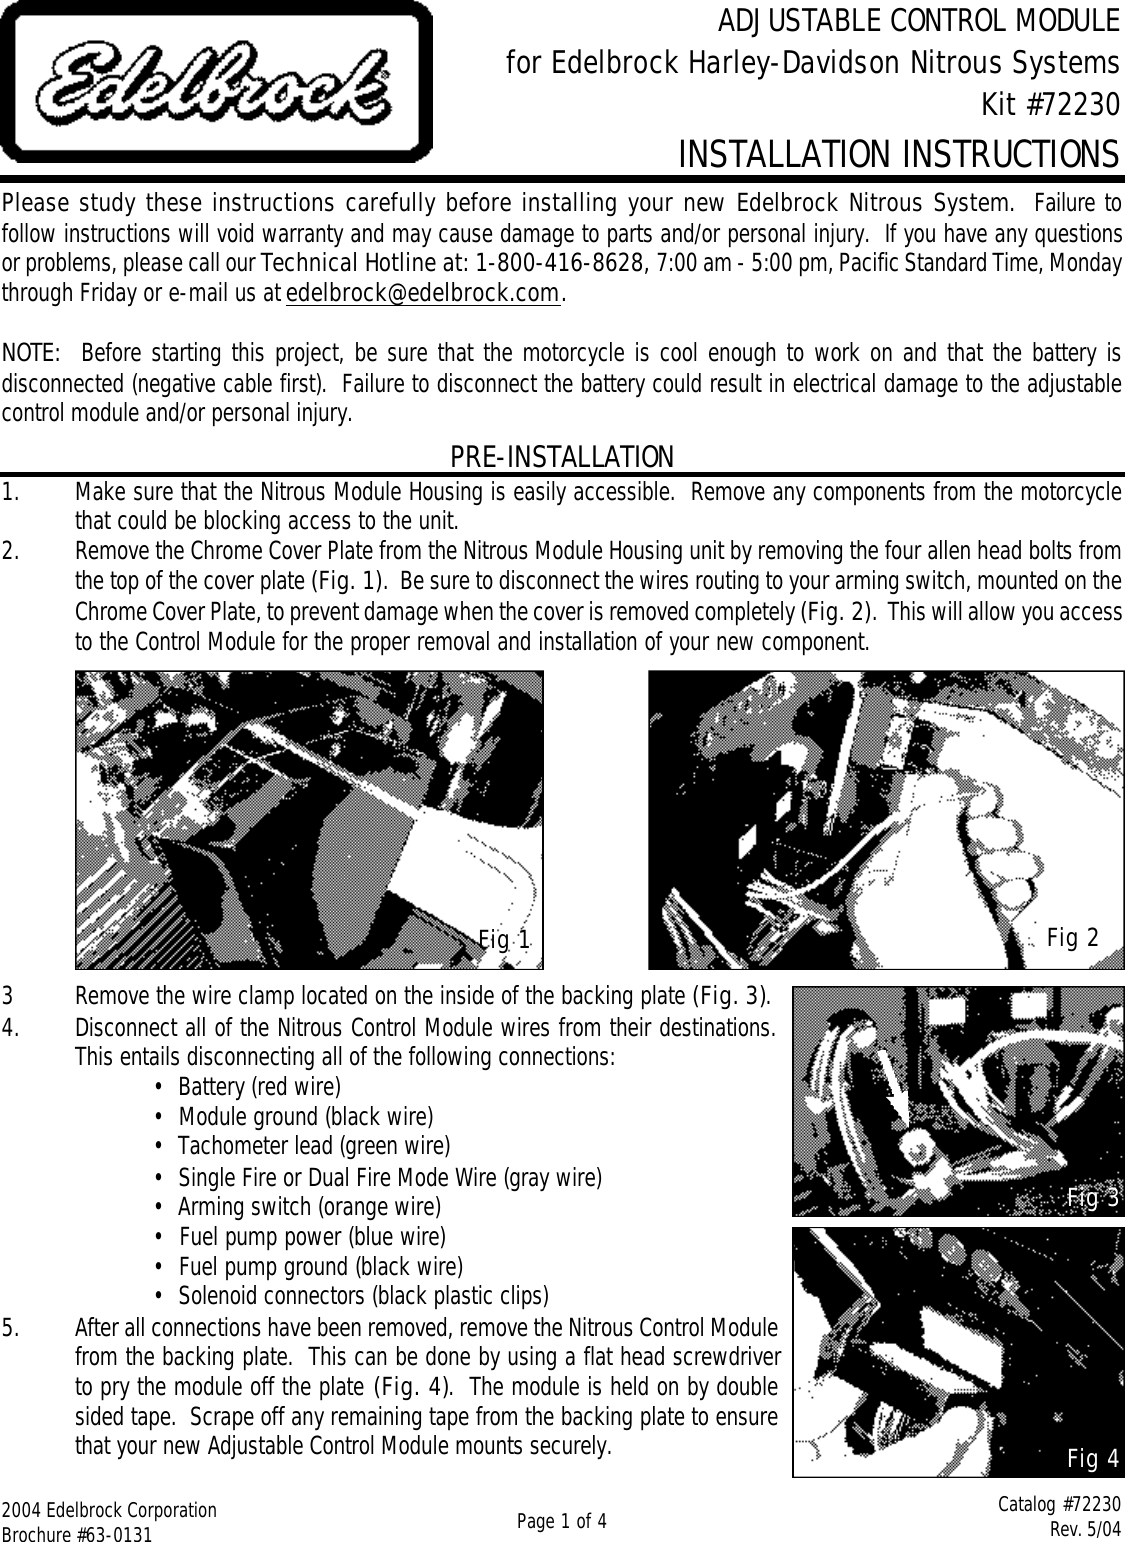 Page 1 of 4 - Edelbrock Edelbrock-72230-Users-Manual- 72230 - Adjustable Control Module For Harley-Davidson Nitrous System  Edelbrock-72230-users-manual